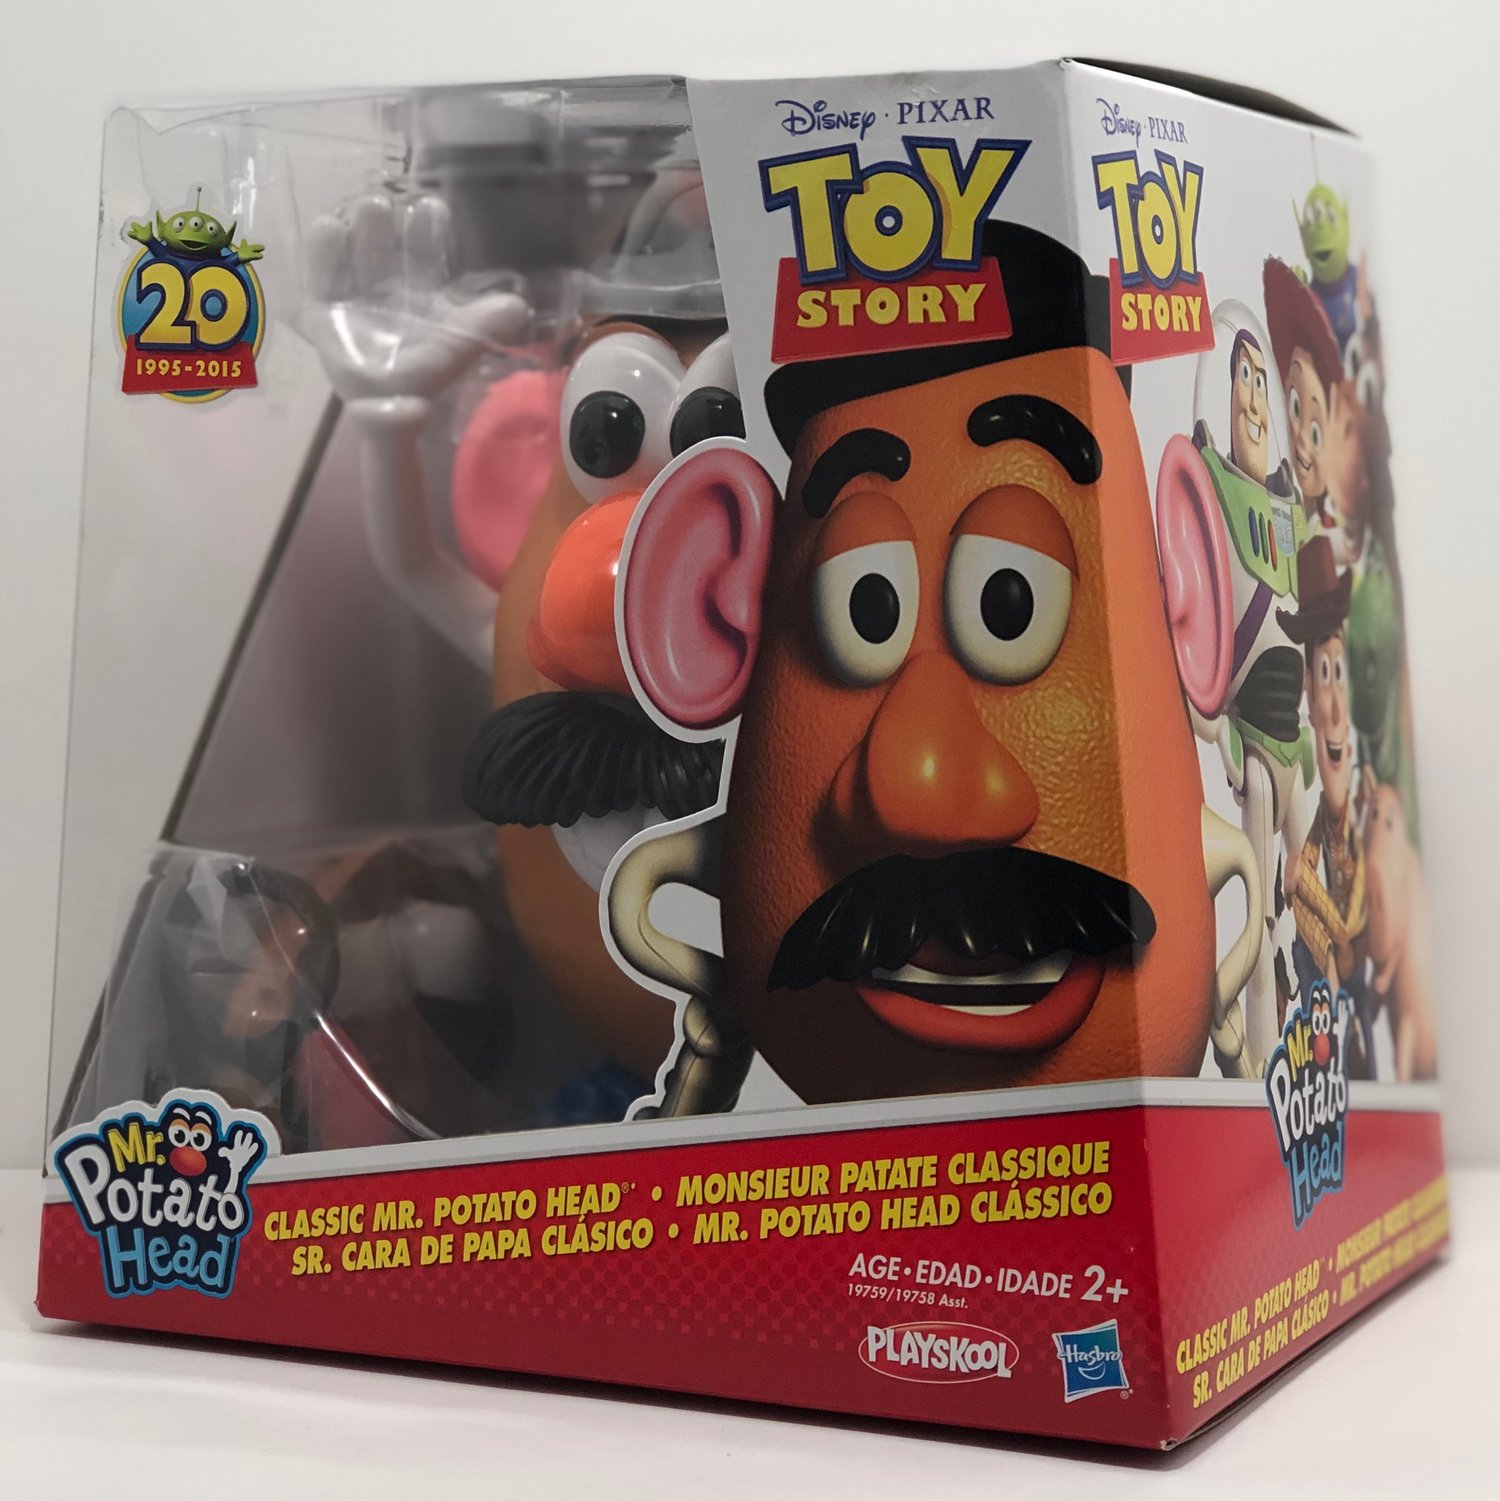 Mr. Potato Head Disney Pixar 1995-2015 Playskool Toy Story 3 Classic